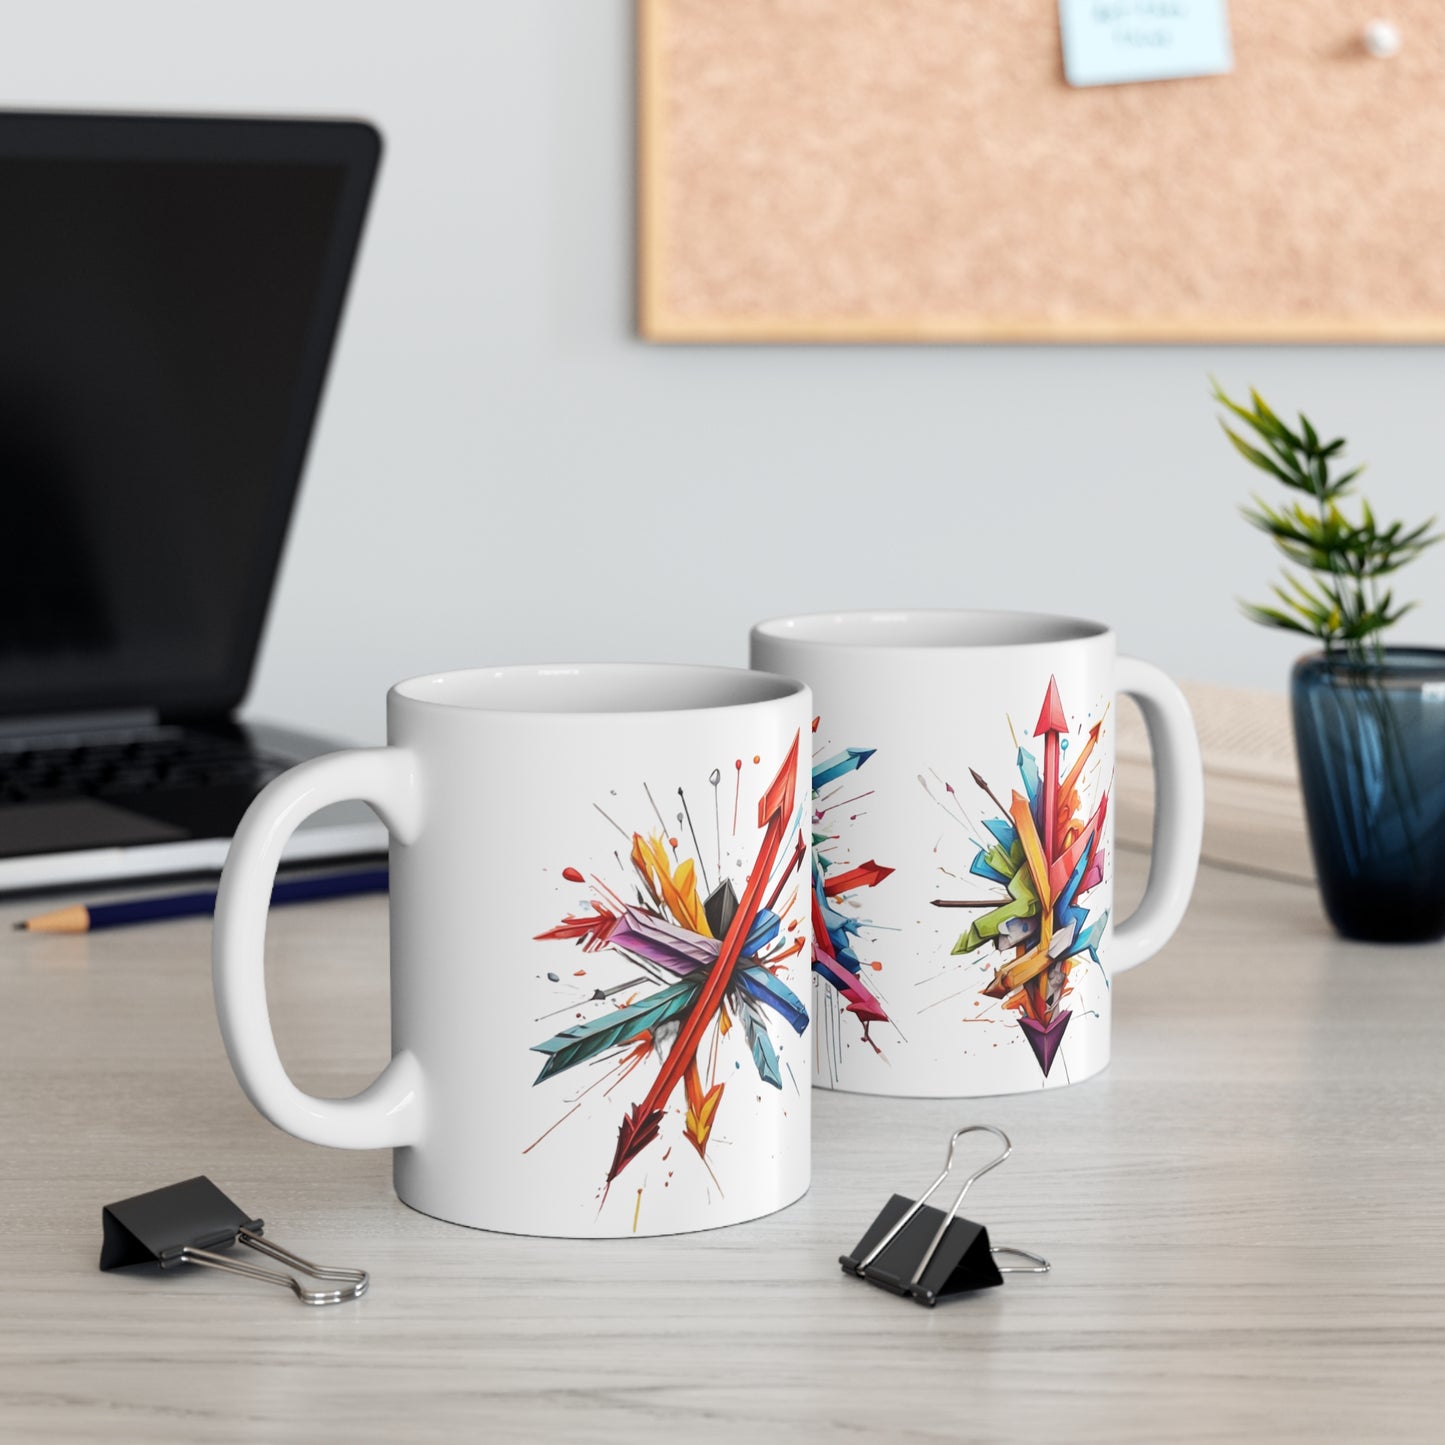 Colourful Arrows Artwork Mug - Ceramic Coffee Mug 11oz